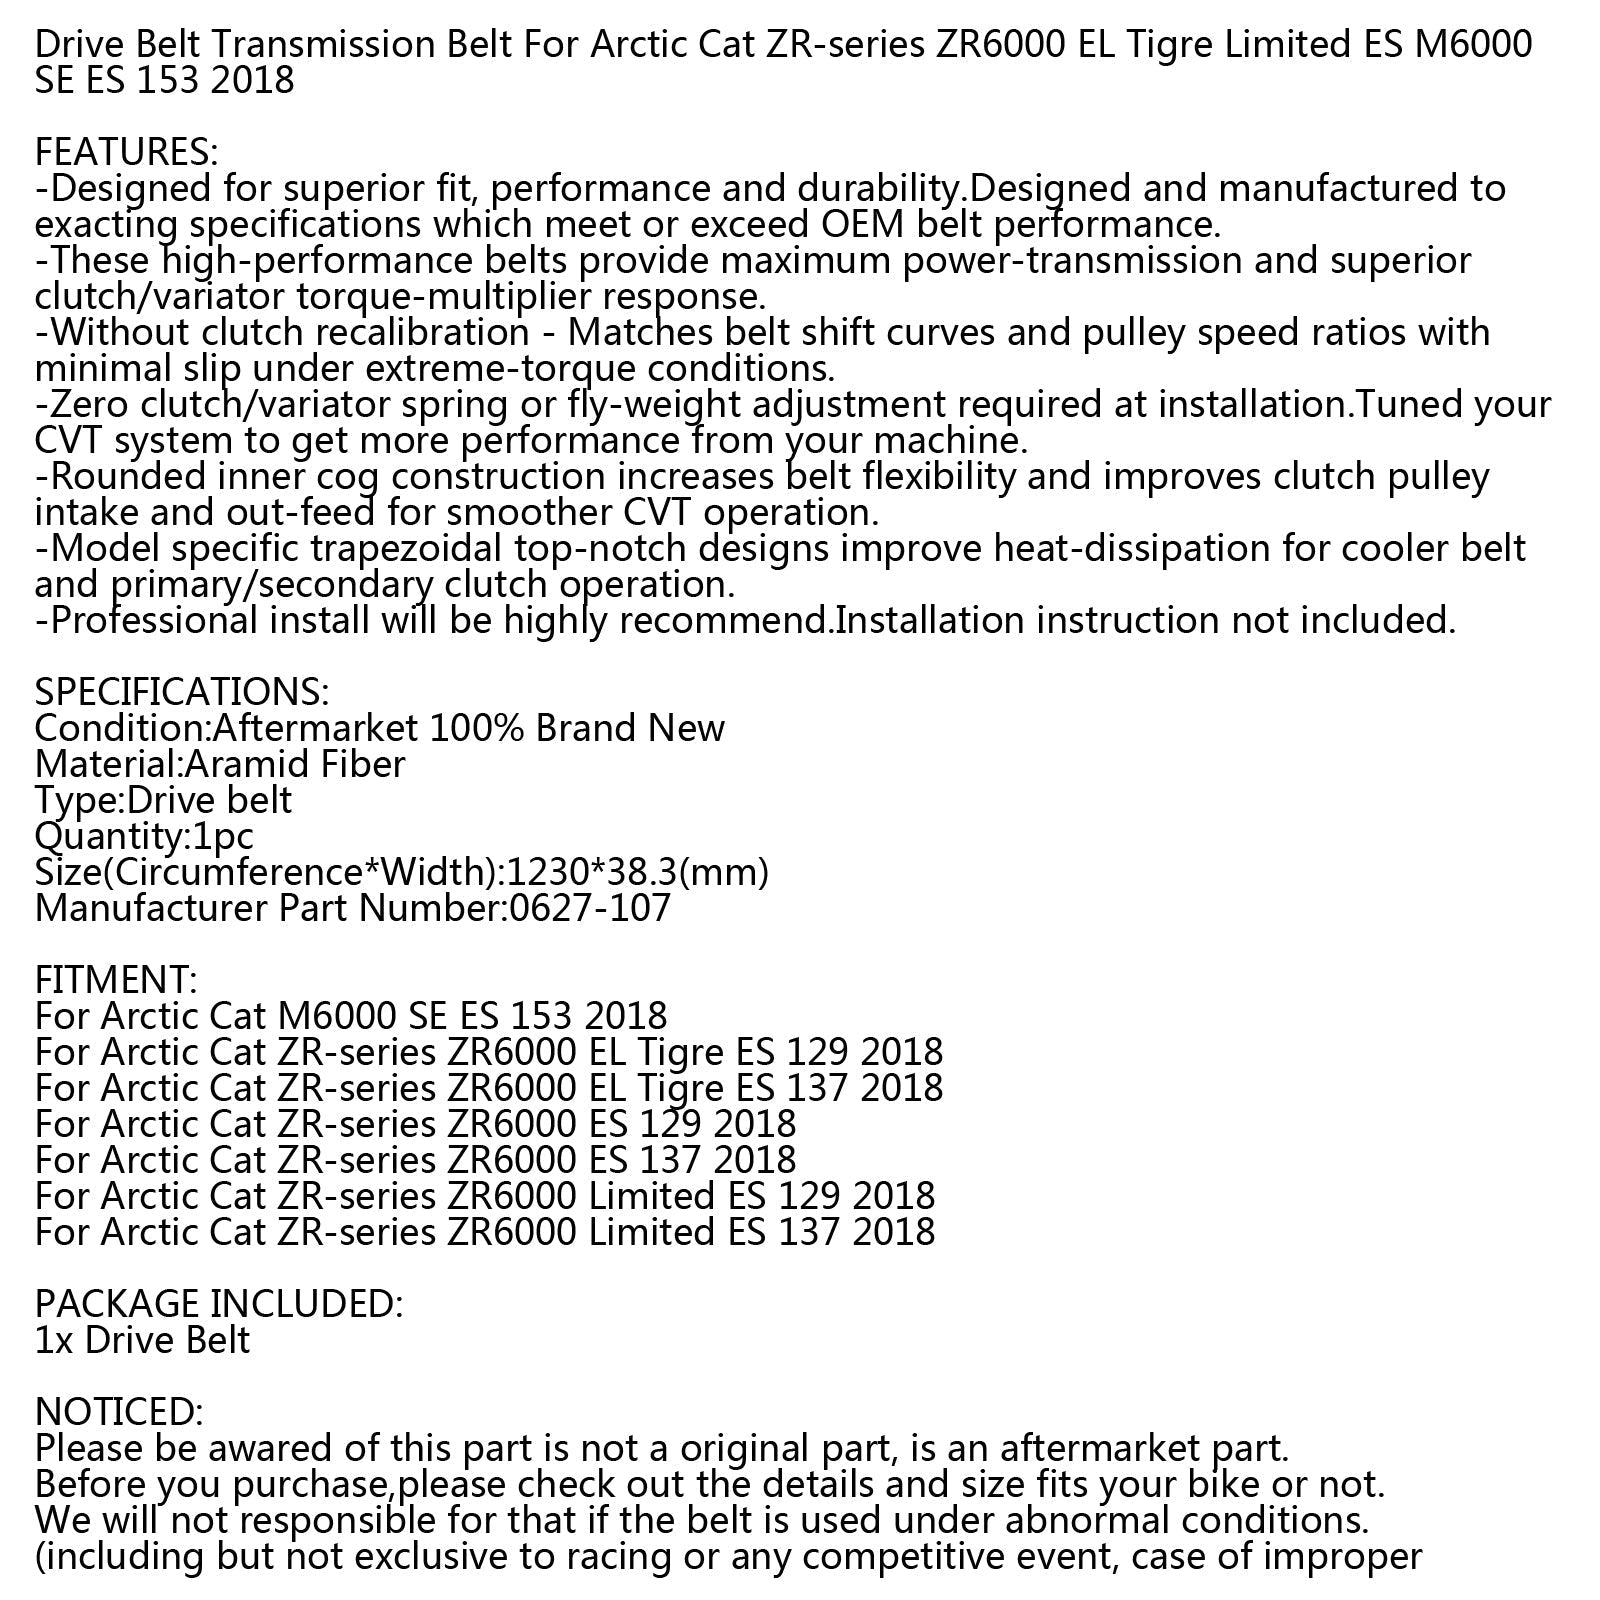 Cinghia di trasmissione per motoslitta serie ZR Arctic Cat 0627-107 ZR6000 EL Limited ES 18 Generico